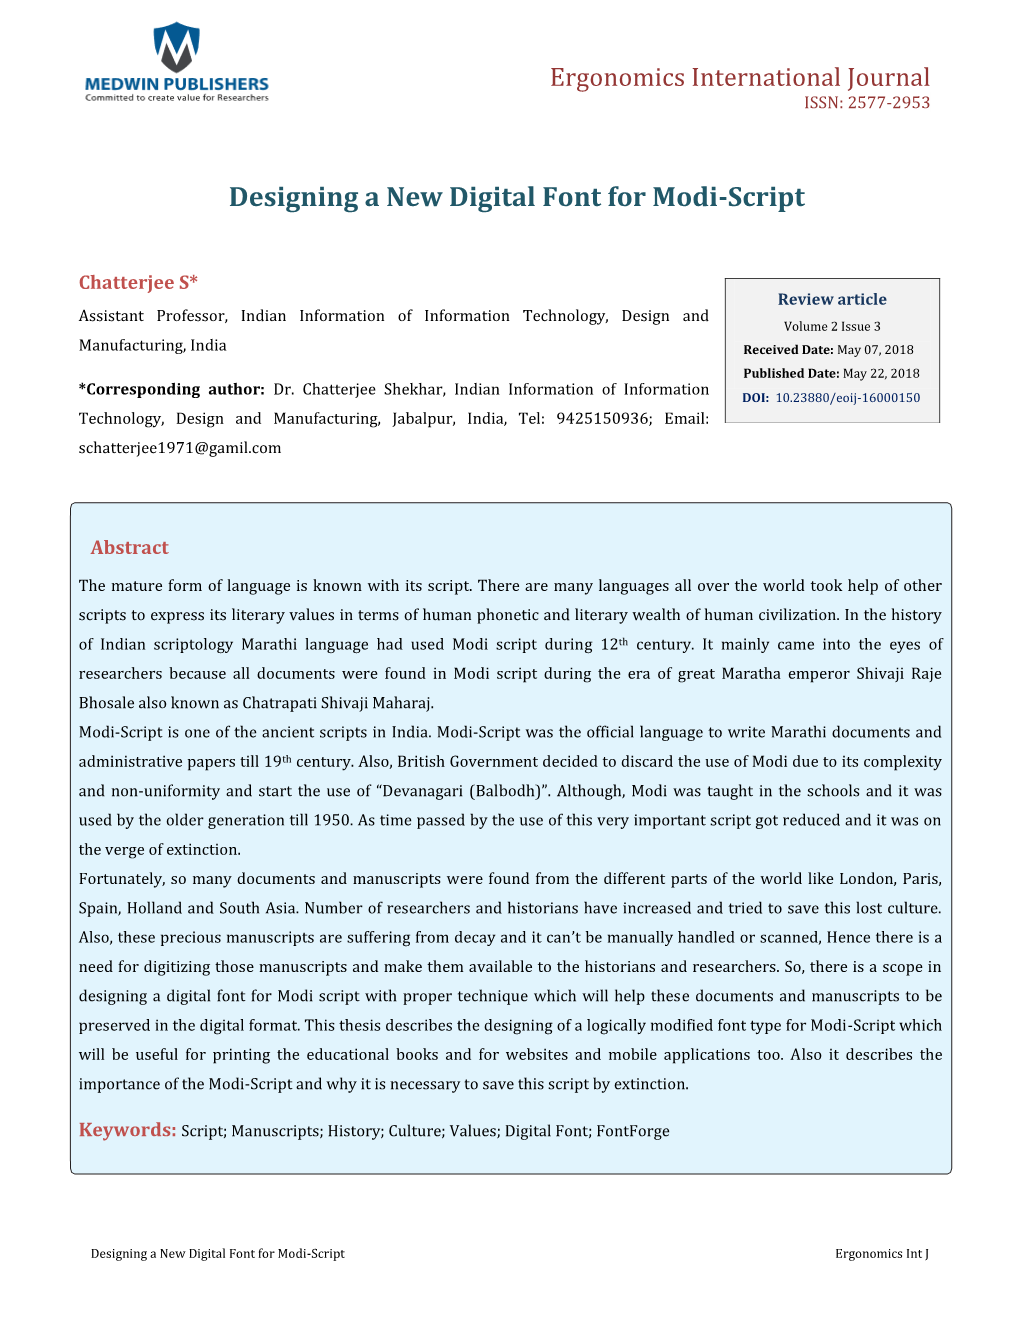 Chatterjee S. Designing a New Digital Font for Modi-Script. Ergonomics Int J 2018, Copyright© Chatterjee S